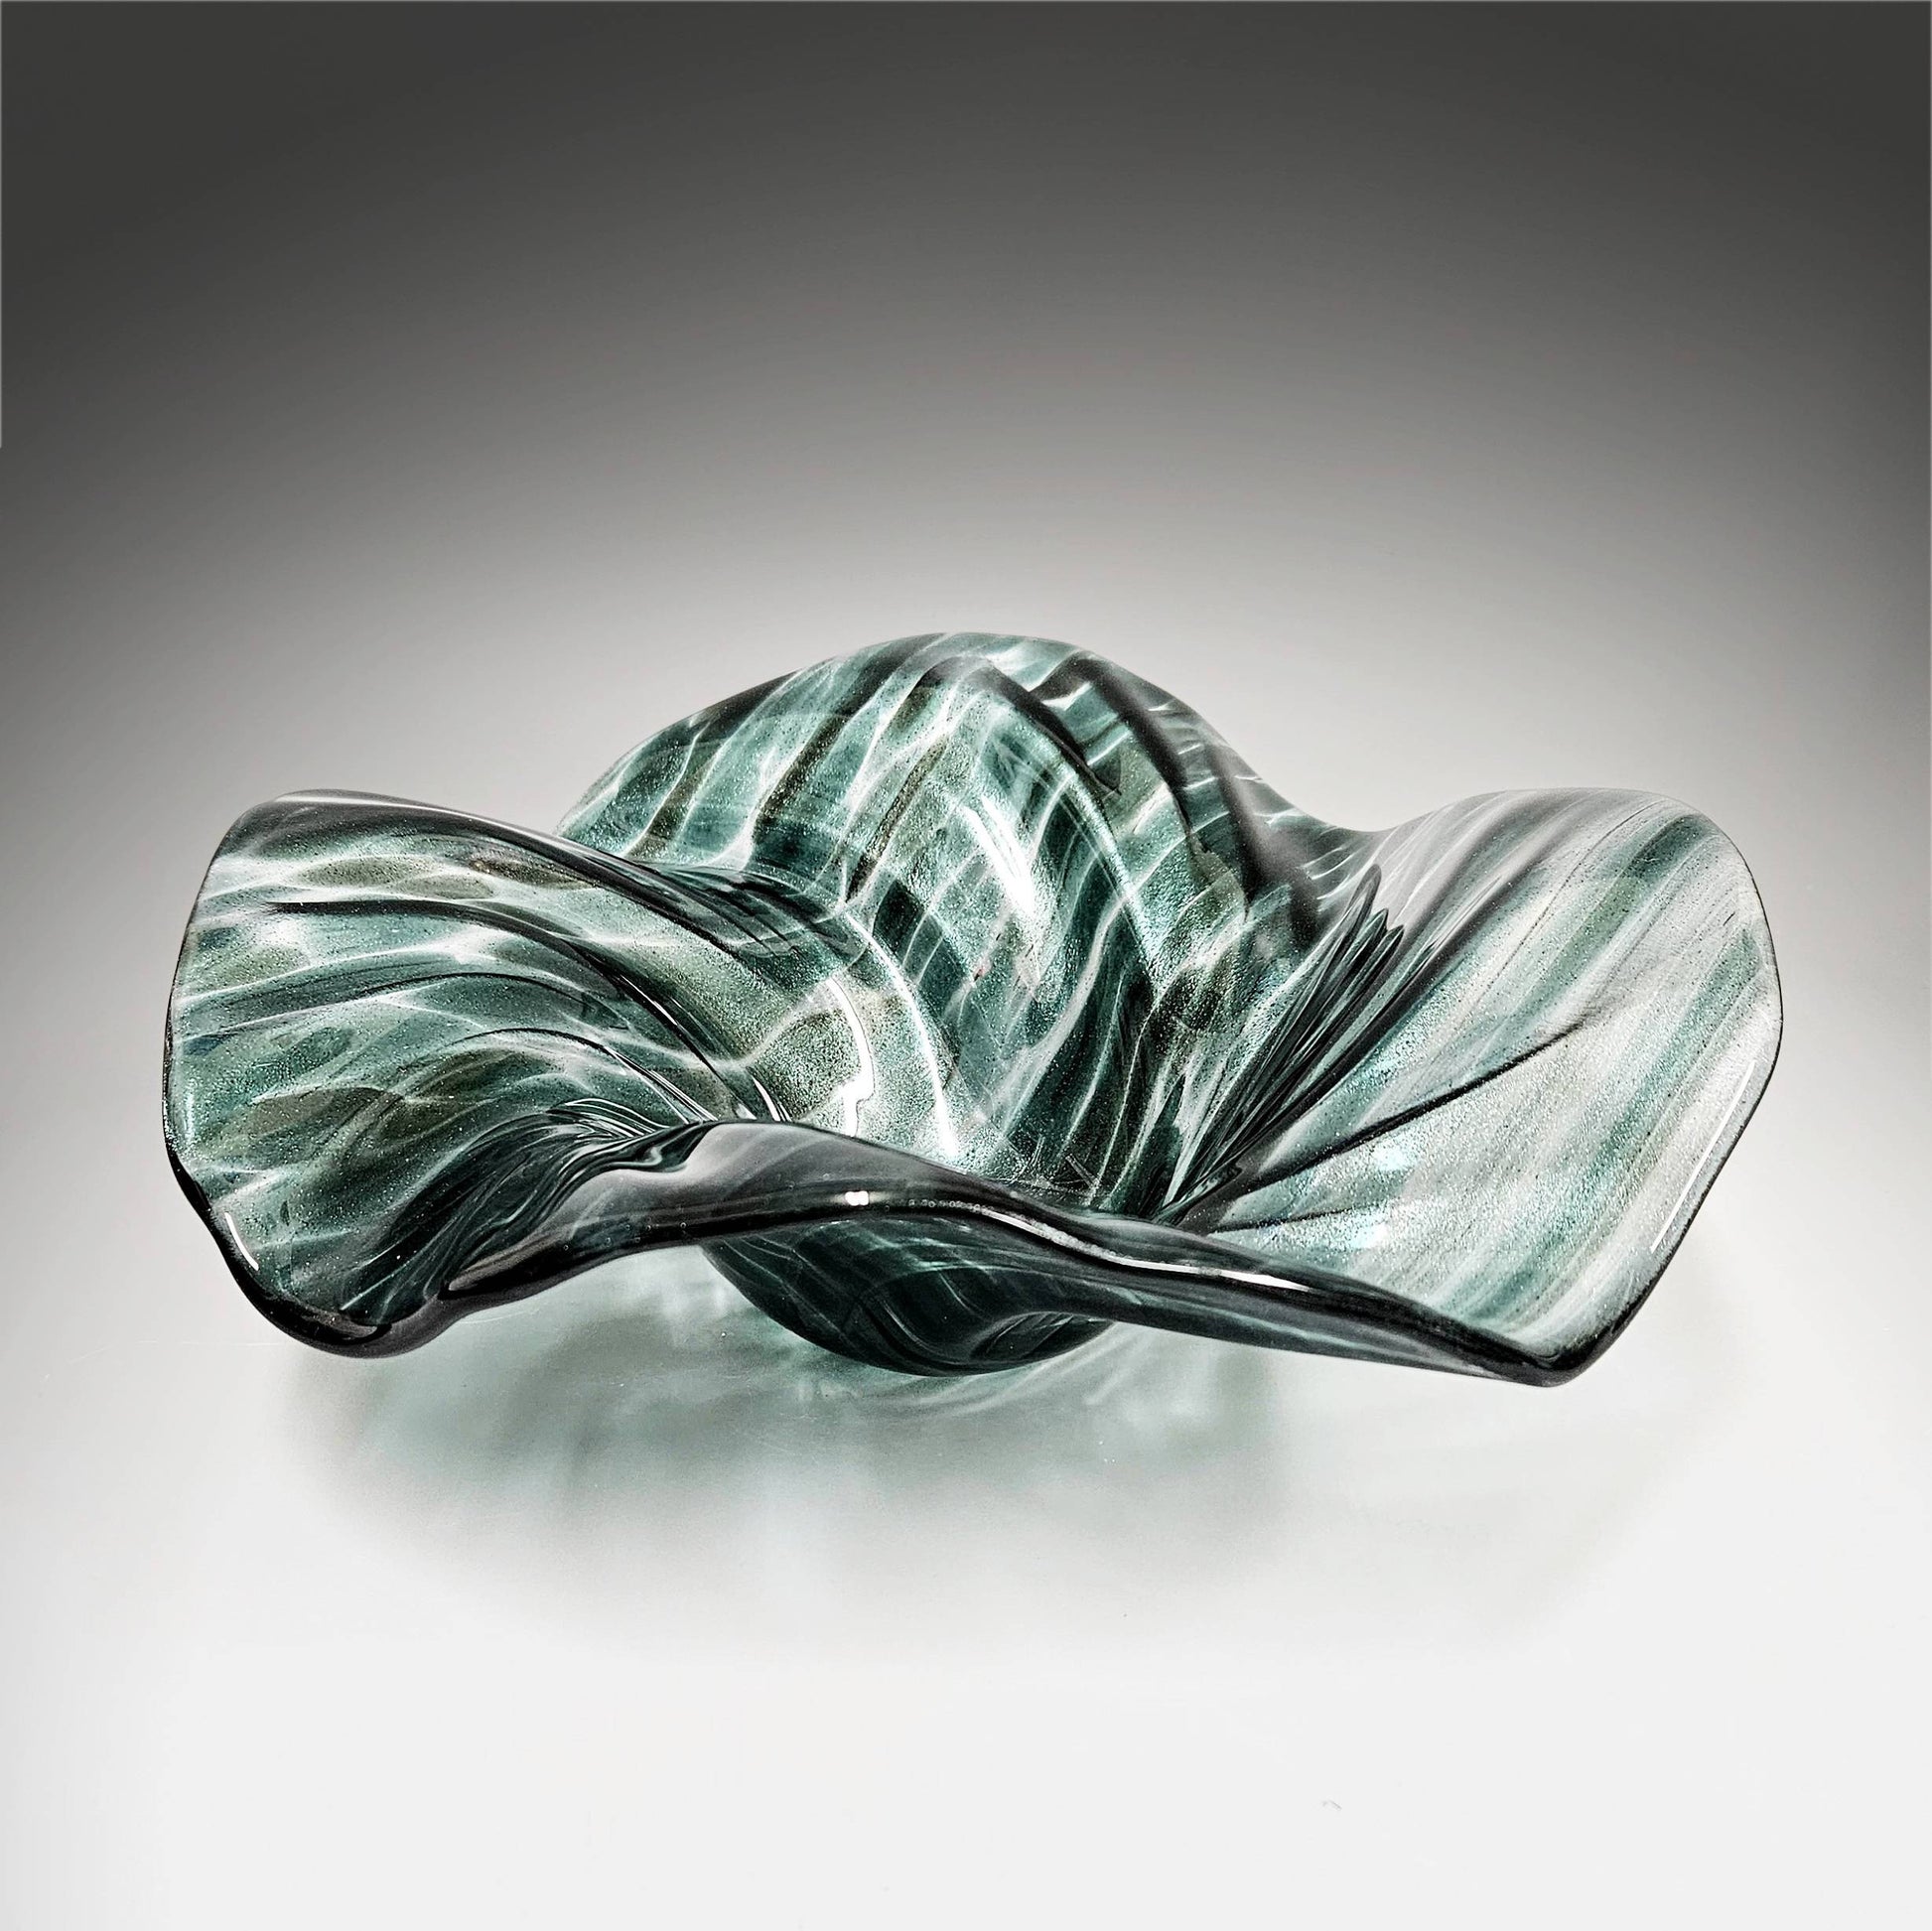 Glass Art Wave Bowl in Dark Teal Bluish Green | Handcrafted Gift Ideas